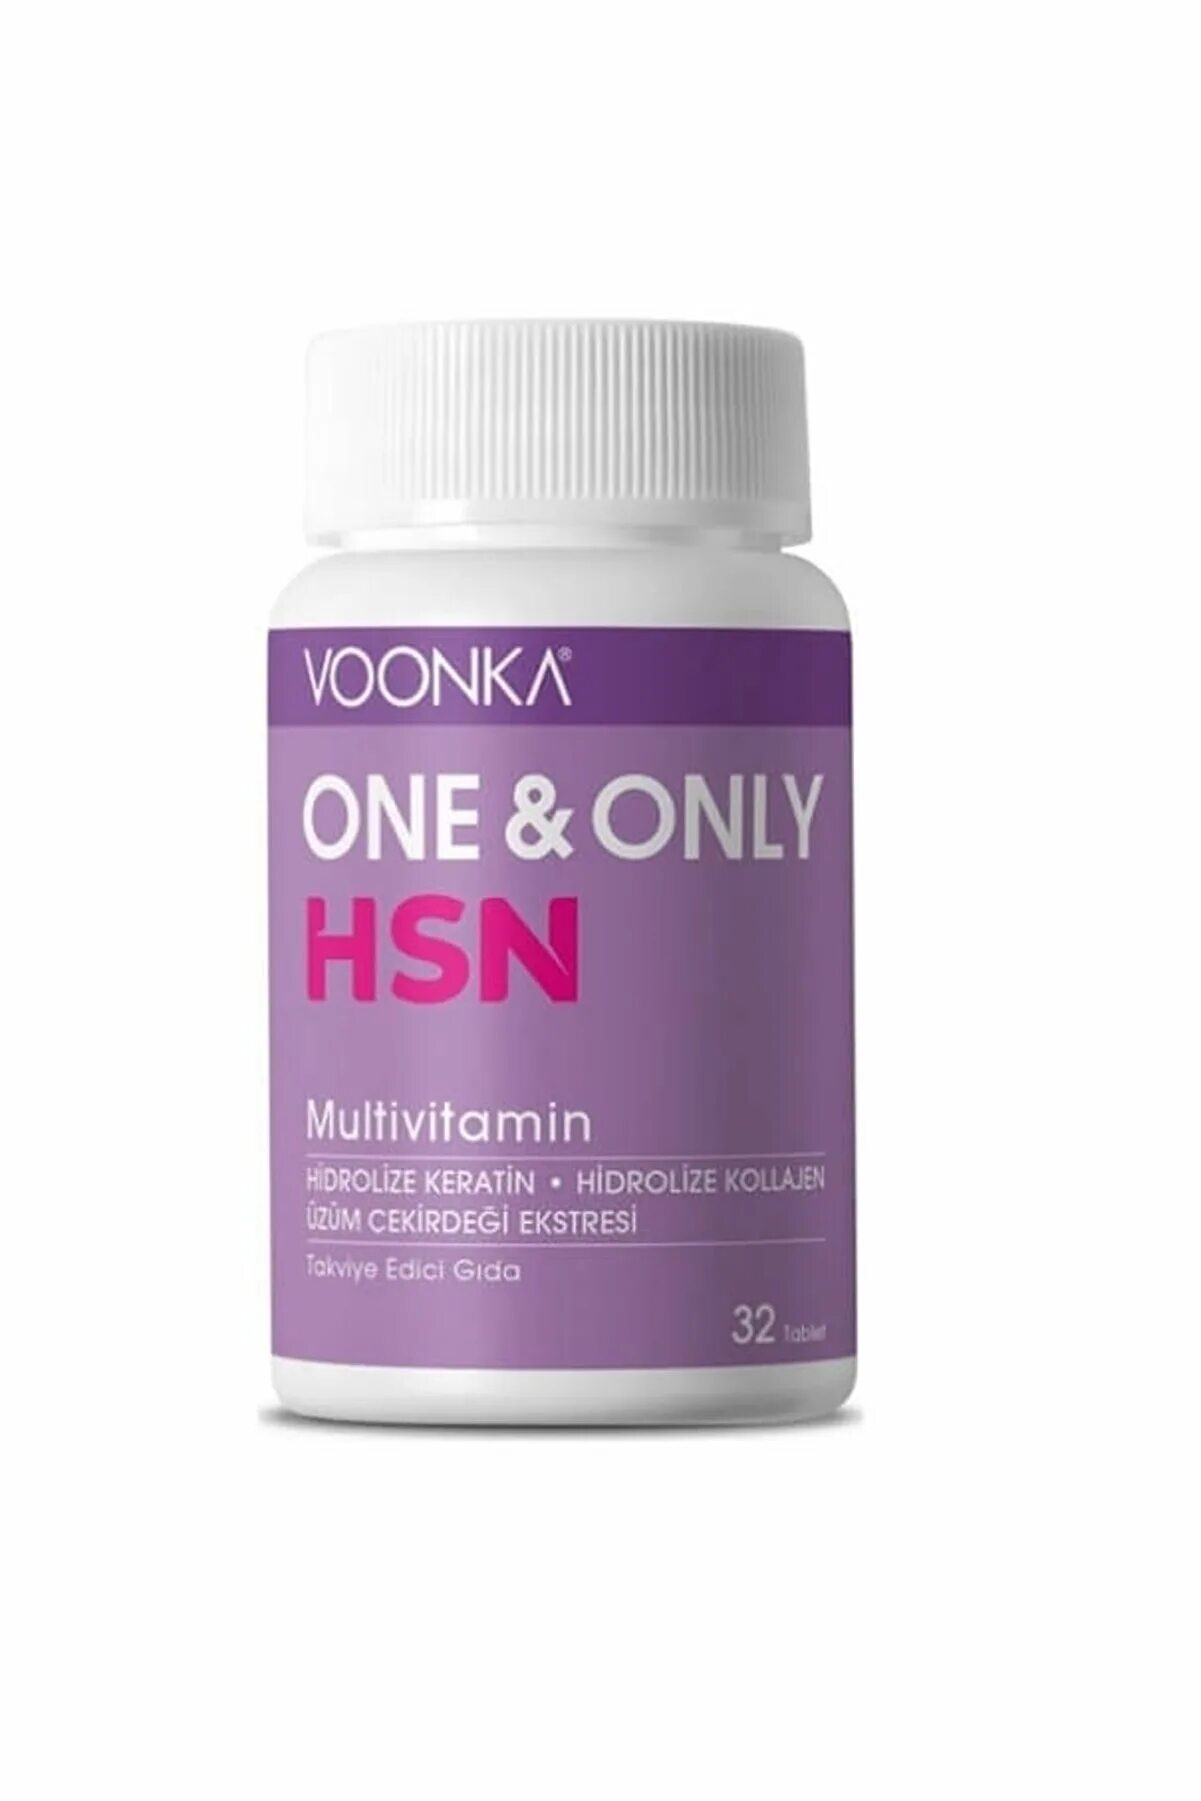 Voonka one only HSN Multivitamin. One only HSN витамины Турция. Voonka Multivitamin. Витамины HSN.